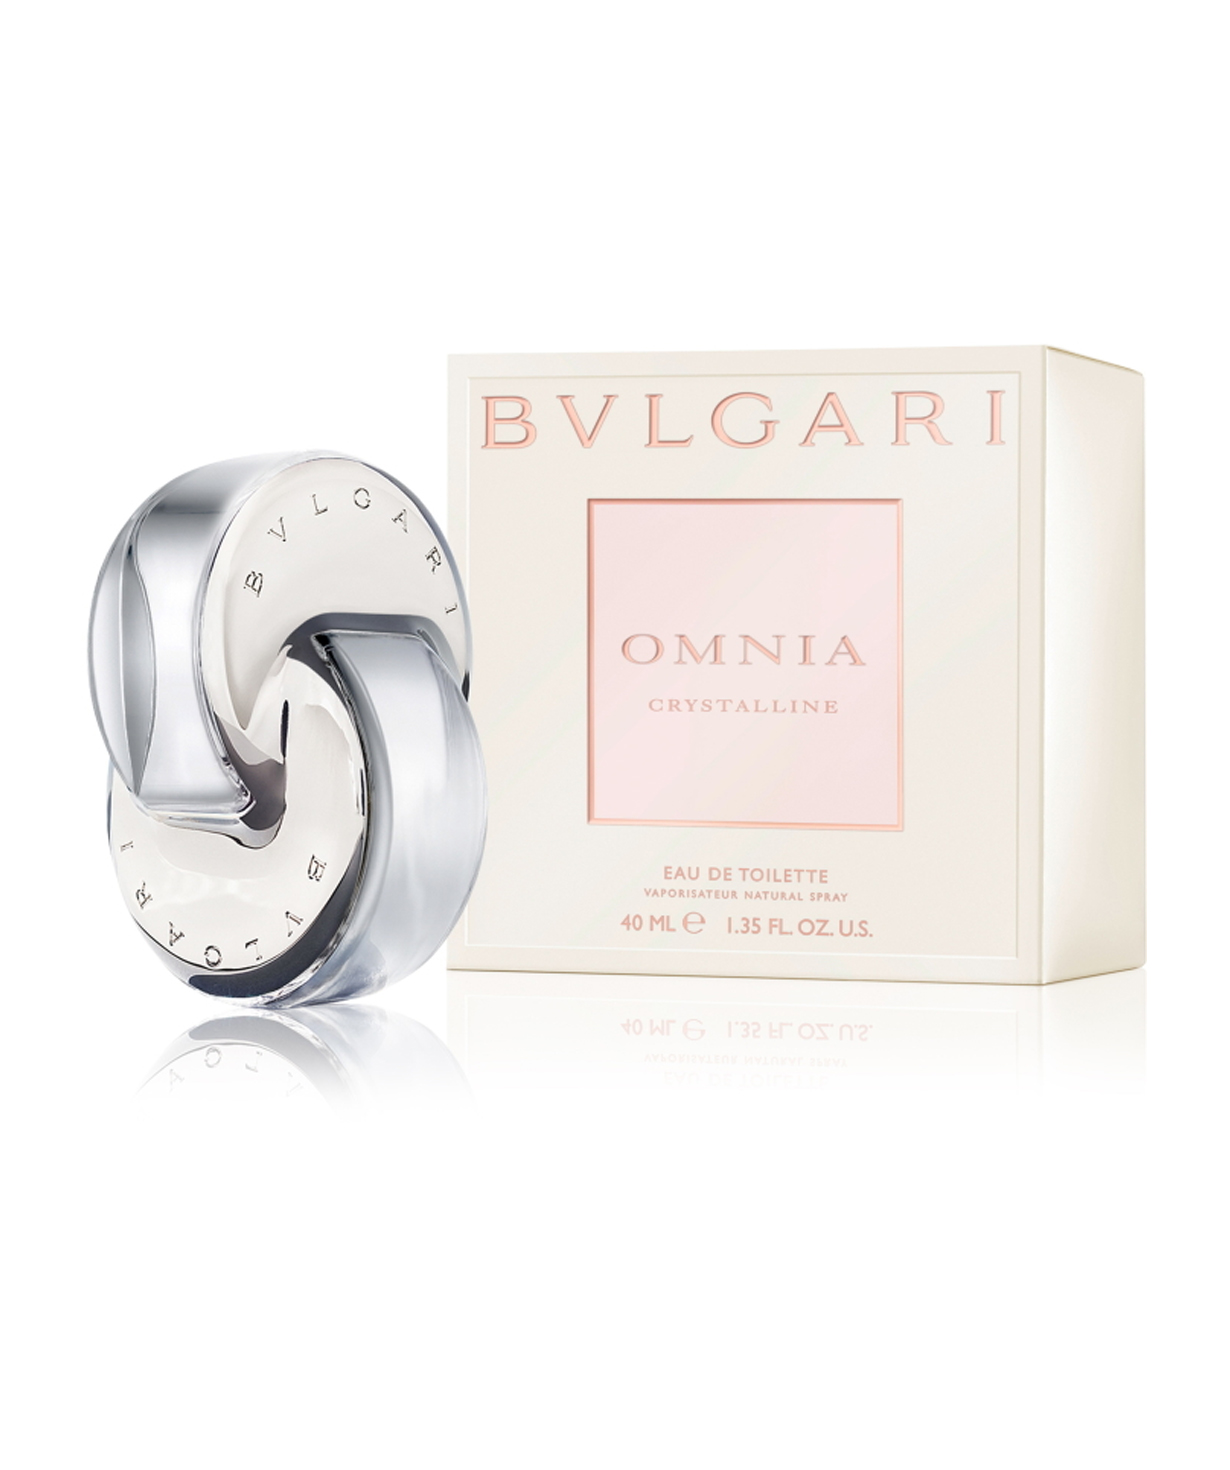 Perfume «Bvlgari» Omnia Crystalline, for women, 40 ml